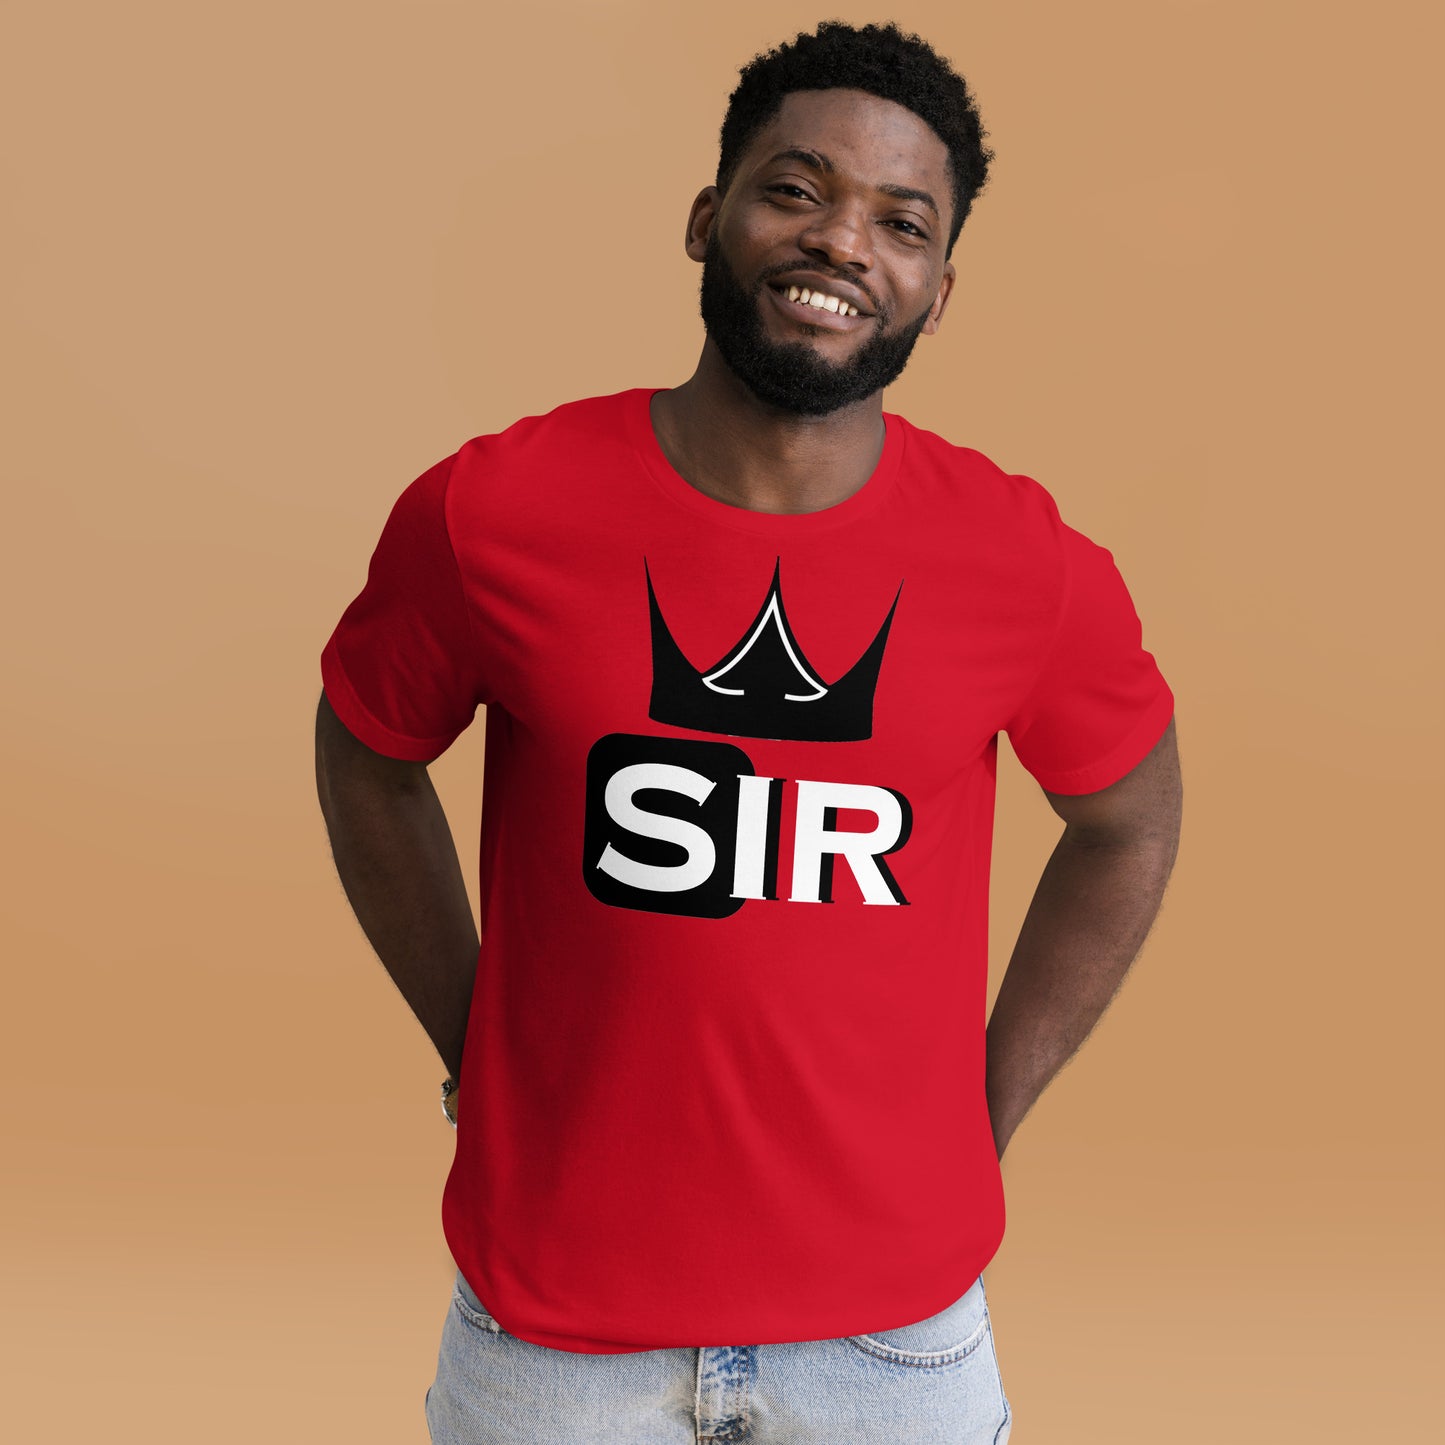 SIR T-Shirt